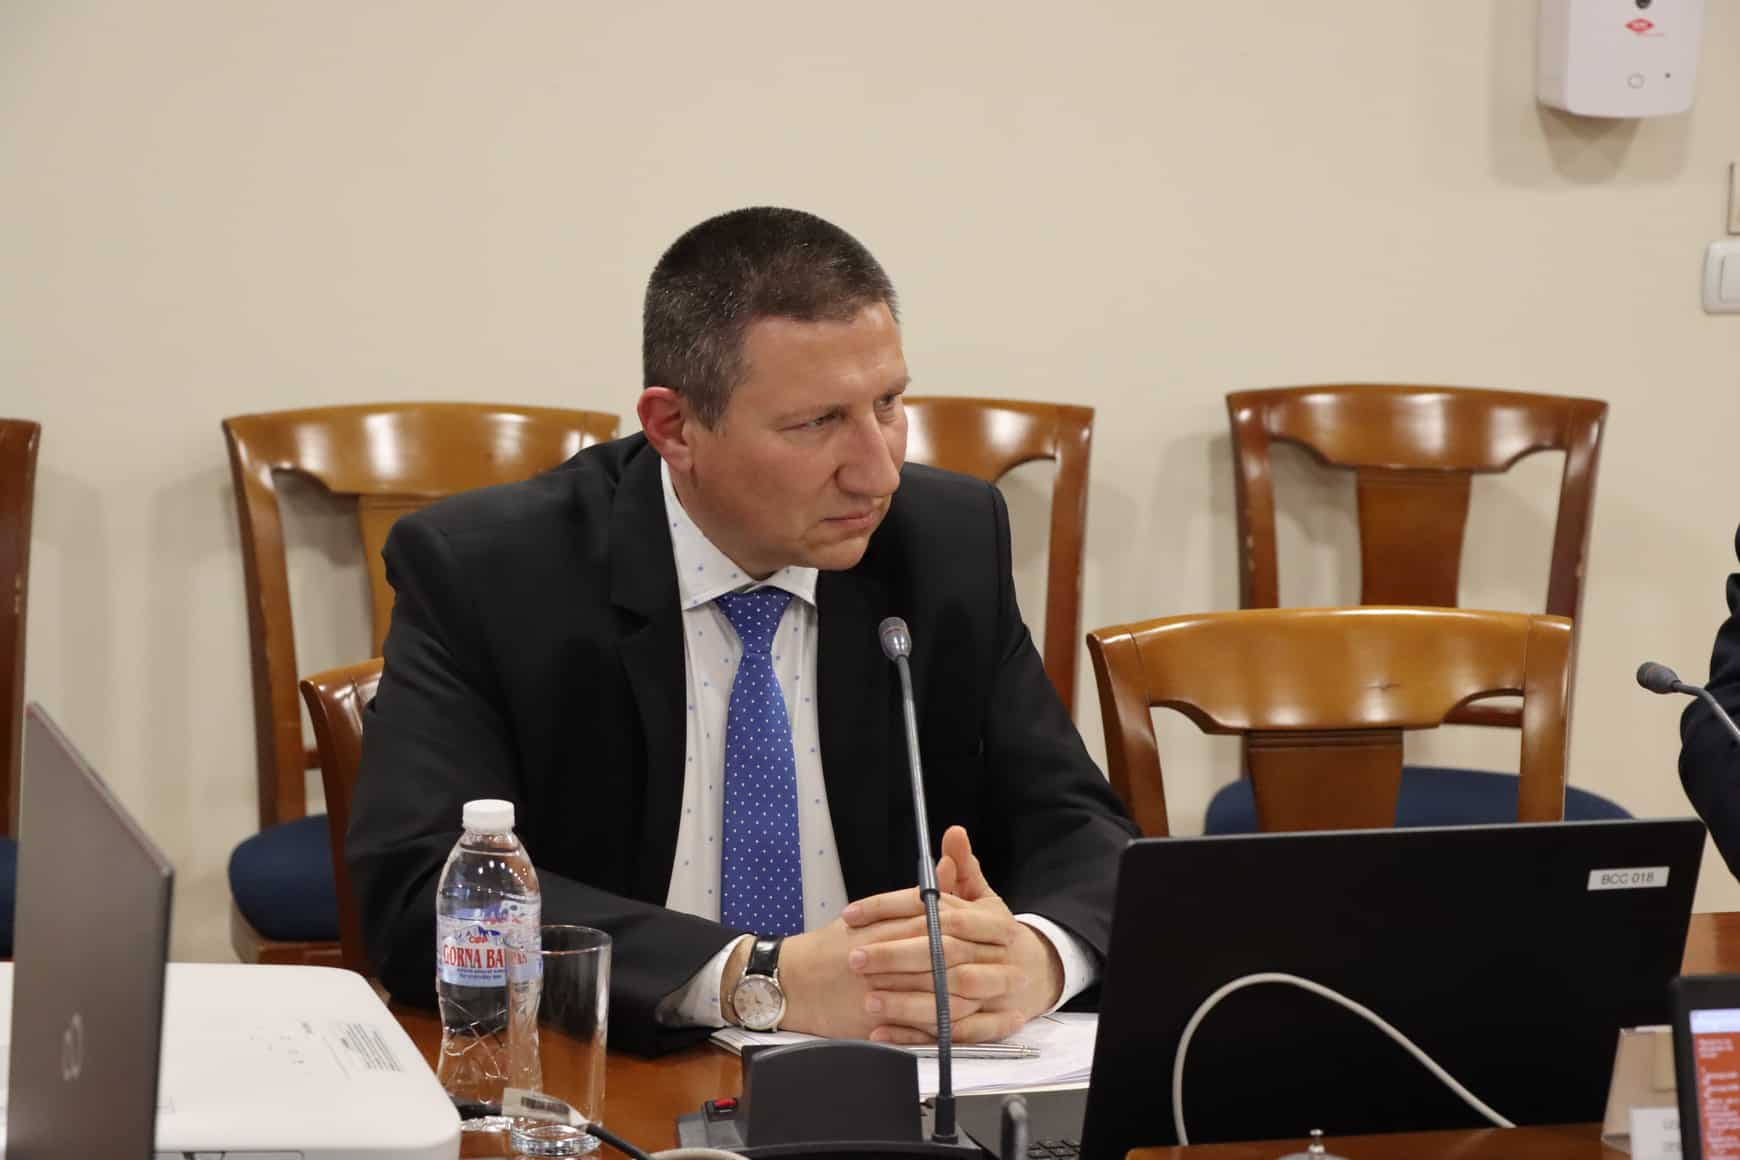 Deputy Prosecutor General Borislav Sarafov shared disturbing circumstances about the